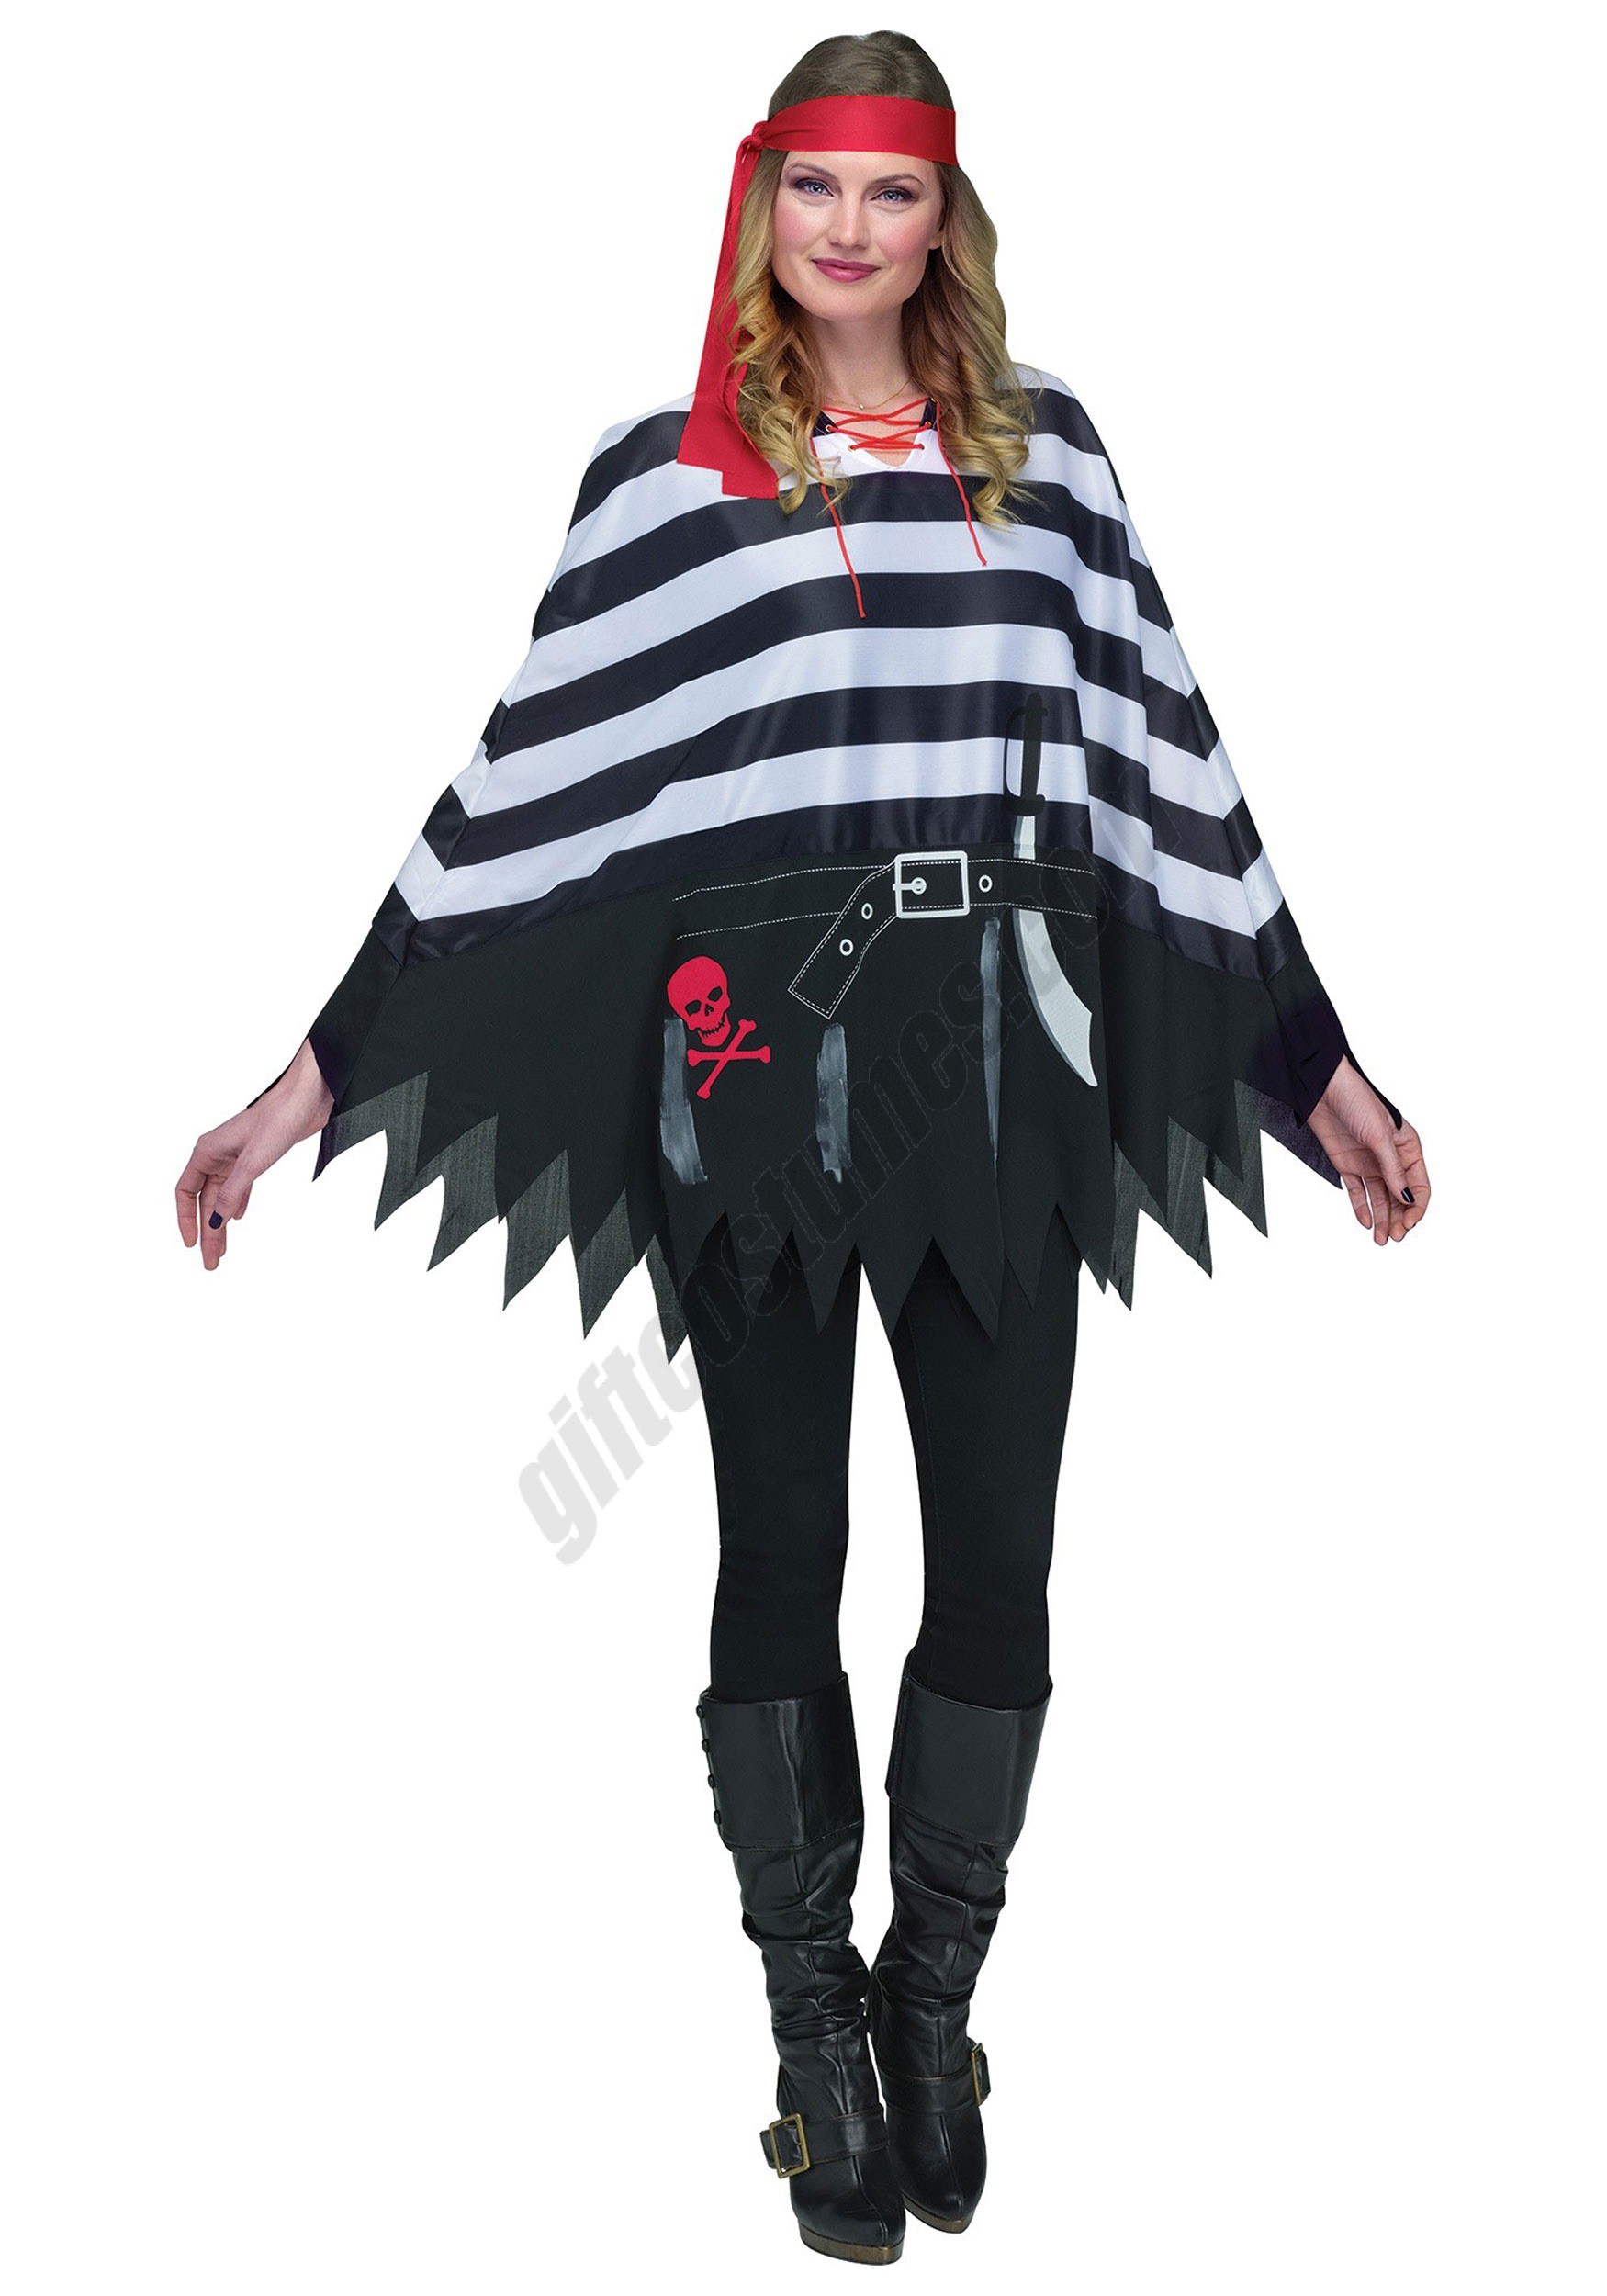 Pirate Poncho Costume - Women's - Pirate Poncho Costume - Women's